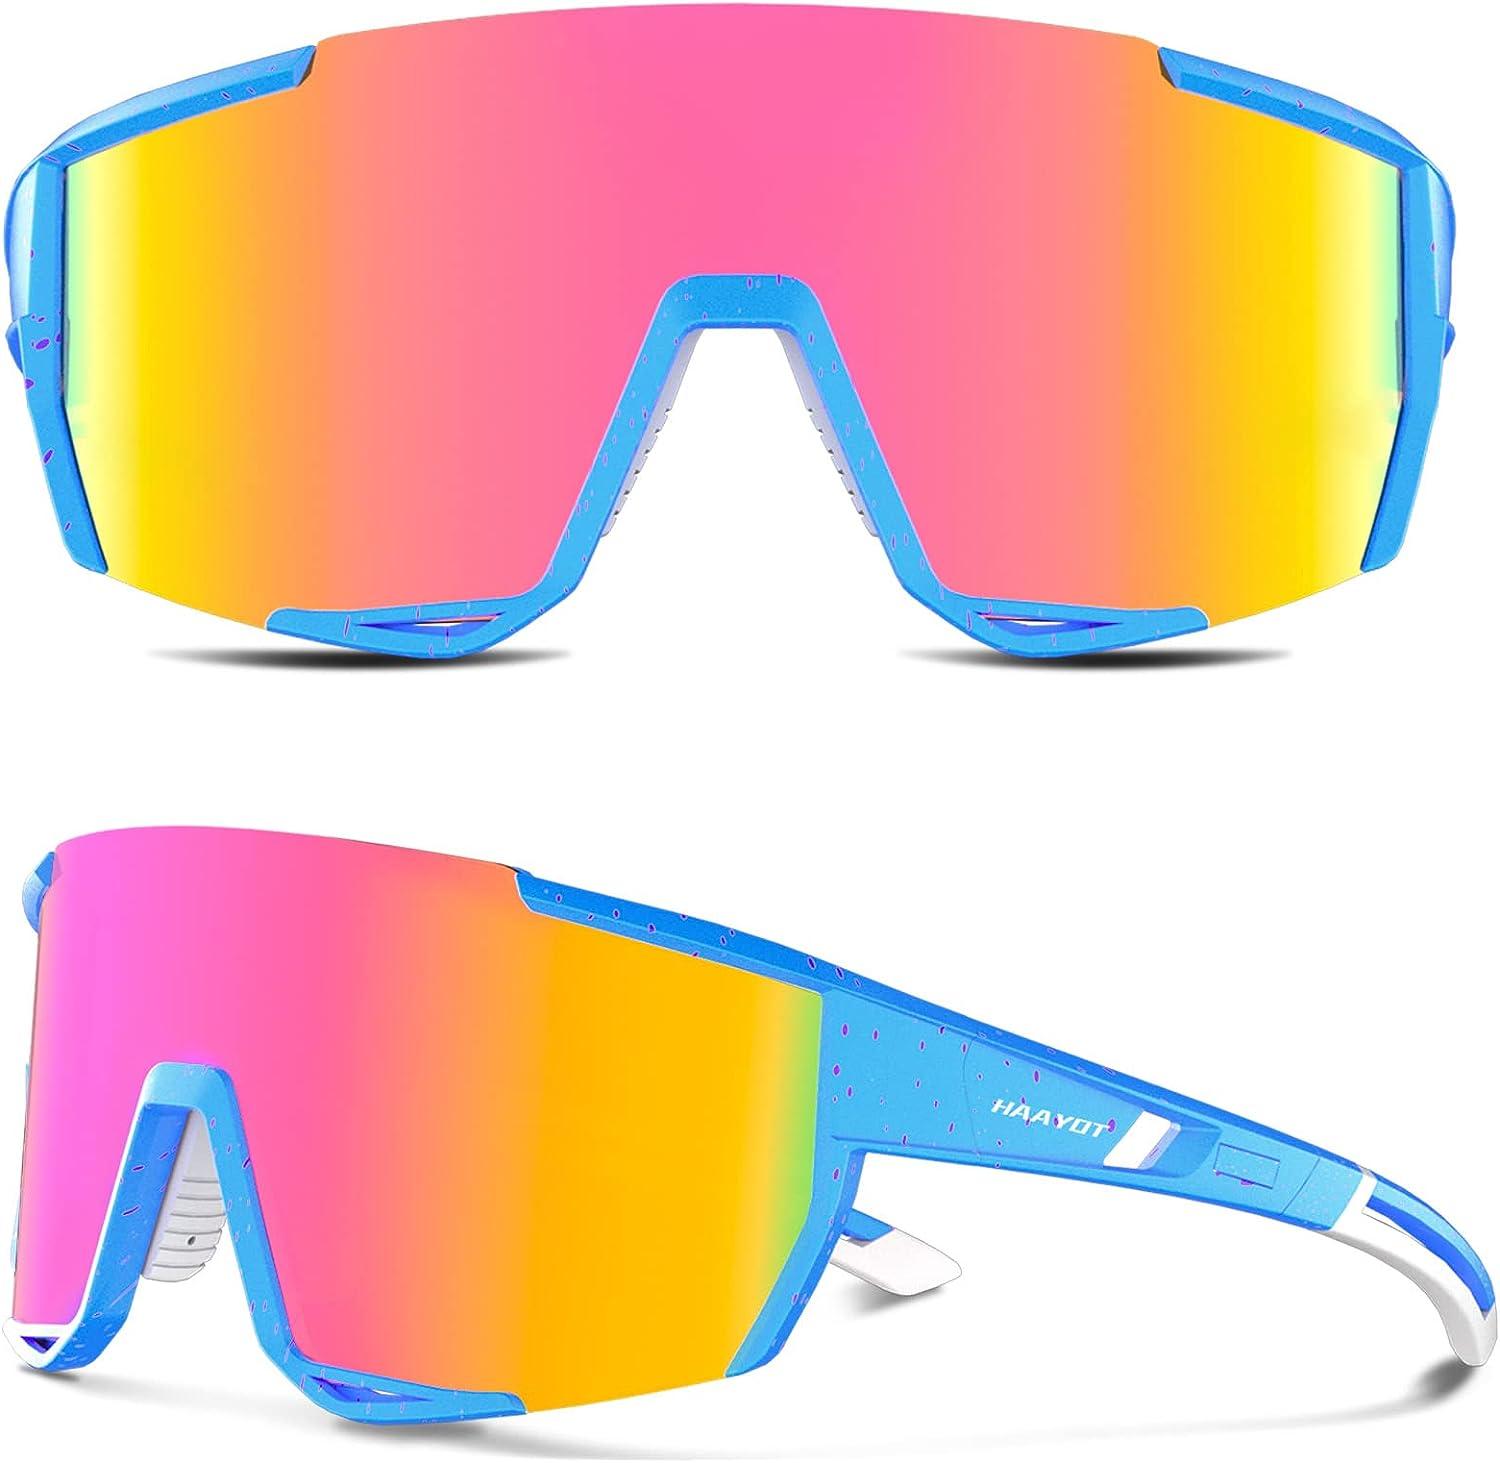 HAAYOT Cycling Glasses Polarized Baseball Sunglasses for Men Women